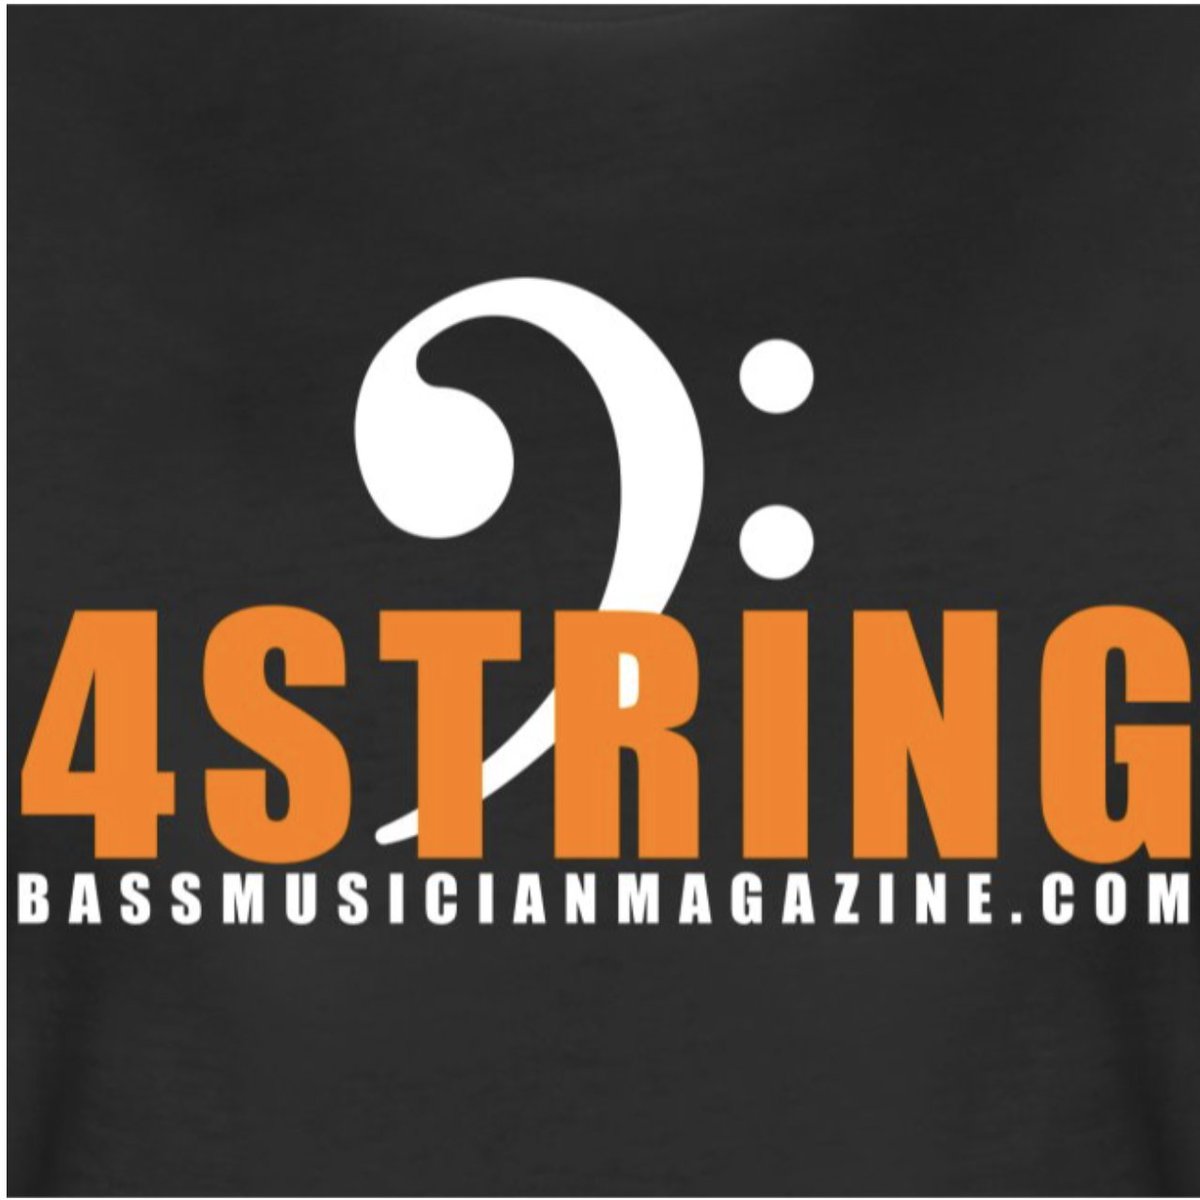 Bass Clef 4-String Bass Women's Premium T-Shirt Sizes S-3XL loom.ly/pePvQ84 #bassmusicianmag #bassmusician #bassplayer #bassguitarist #electricbassist #bassguitars #bassguitar #electricbass #bassist #bass #bassporn #bajo #baixo #baixos #bassline #ad